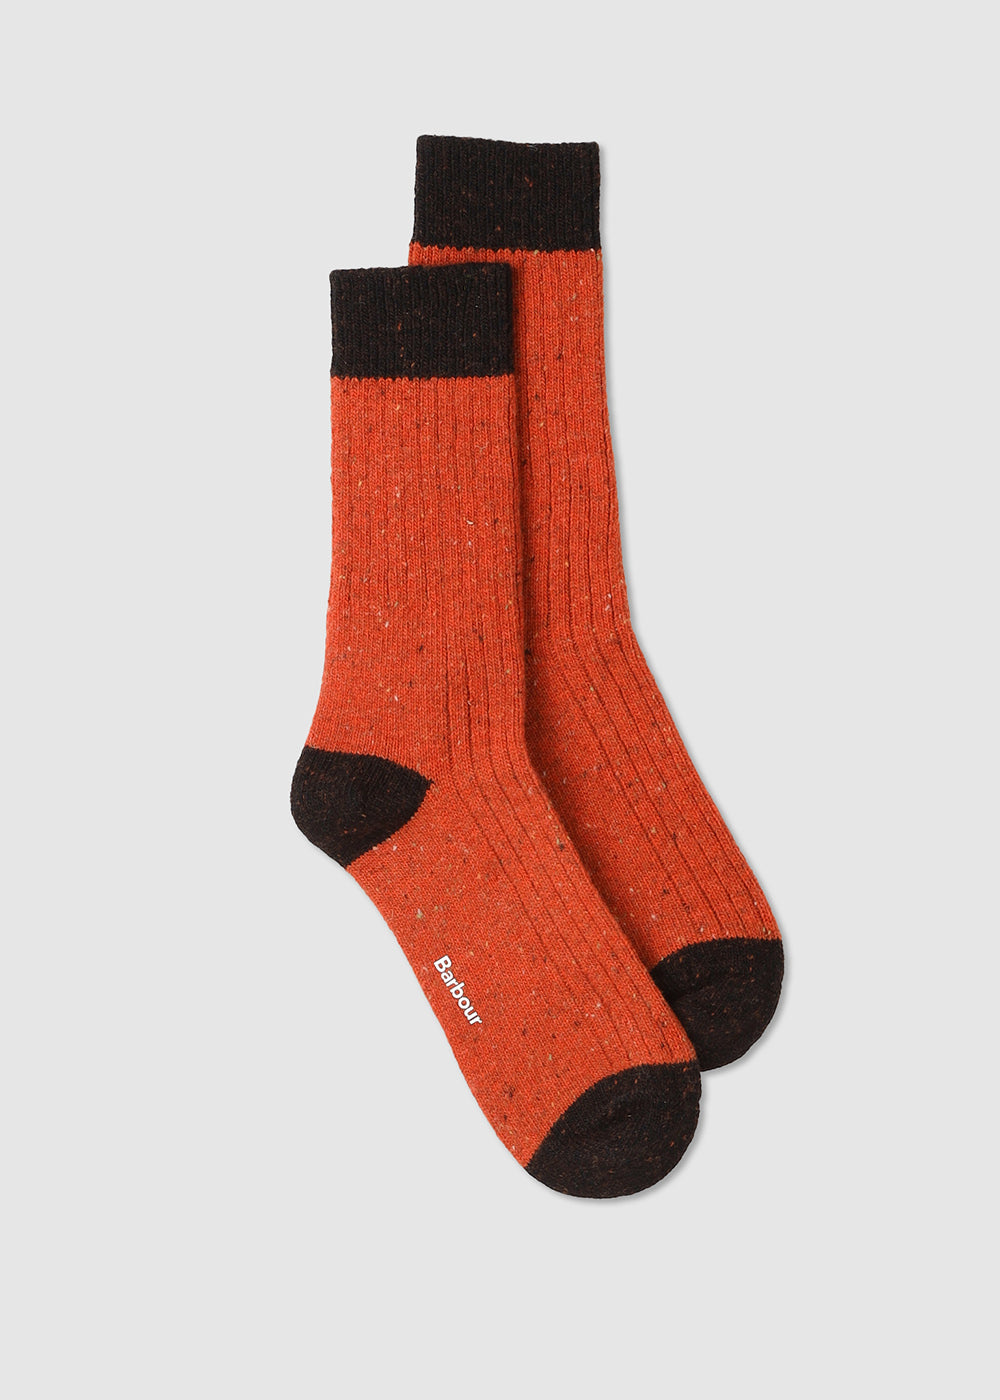 Image of Barbour Mens Houghton Socks In Burnt Orange